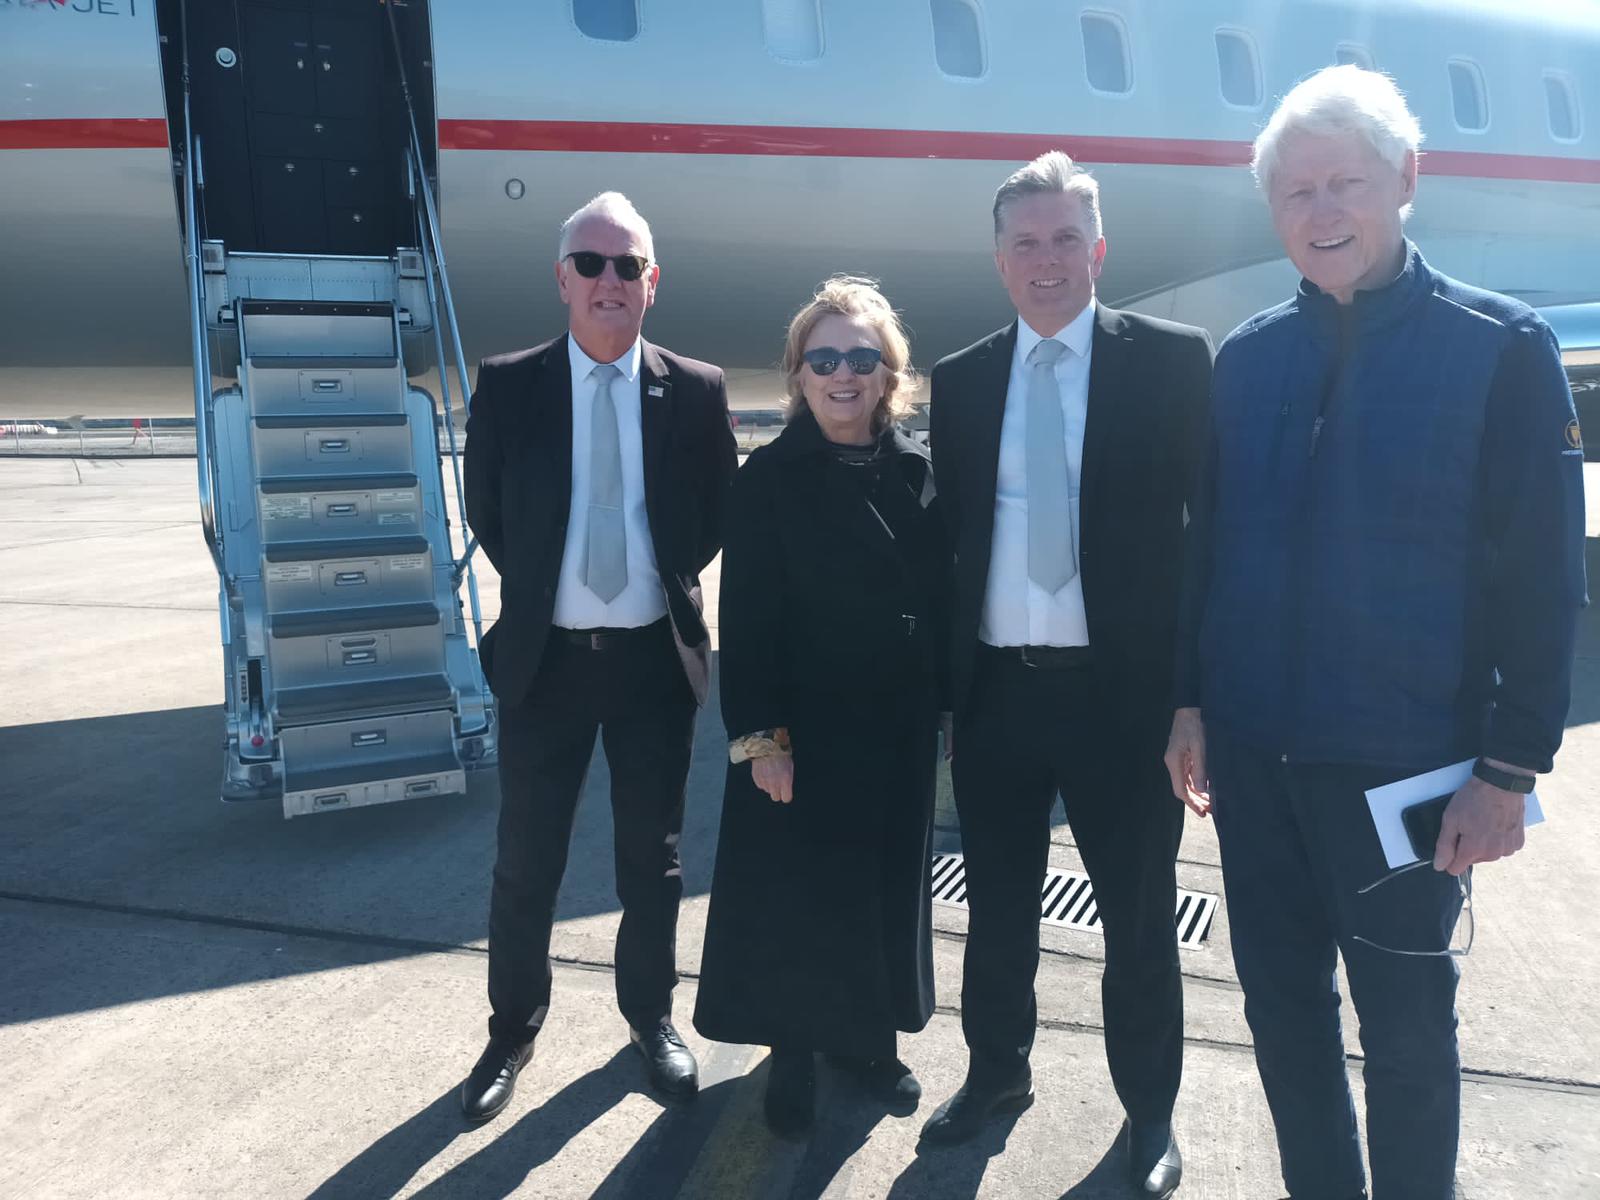 Robert with #POTUS Bill Clinton and his wife Senator Hillary Clinton.